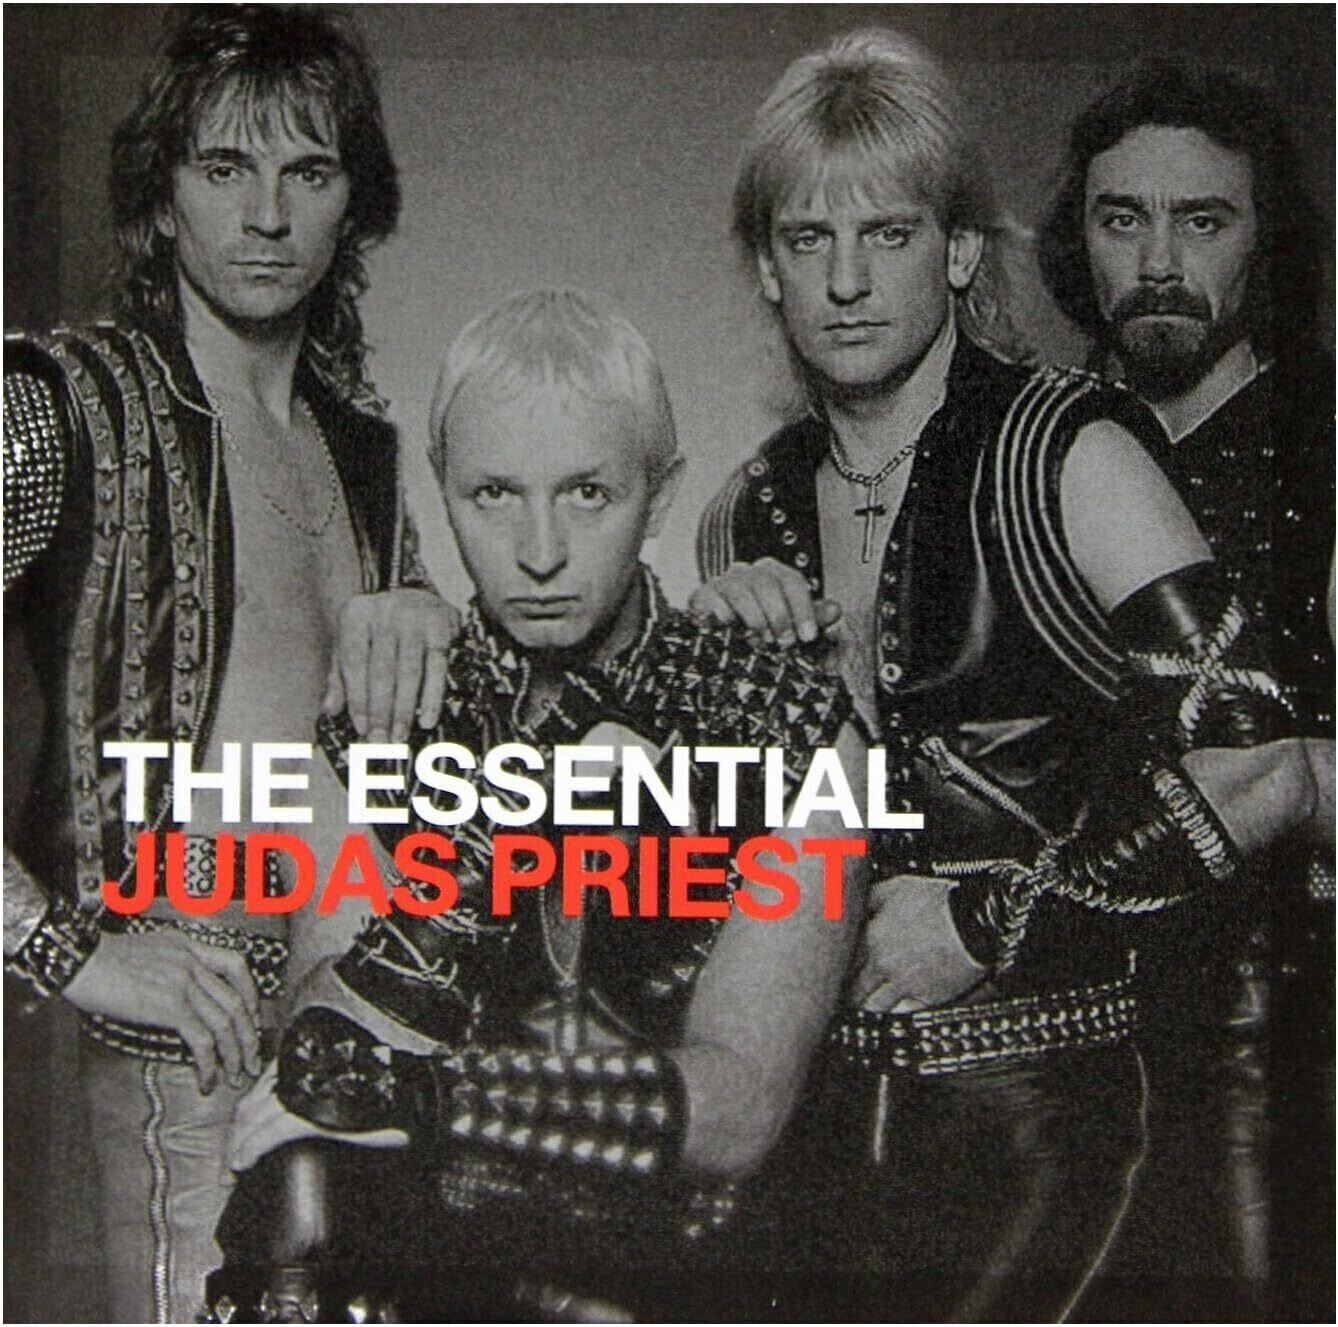 Glasbene CD Judas Priest - Essential Judas Priest (2 CD)